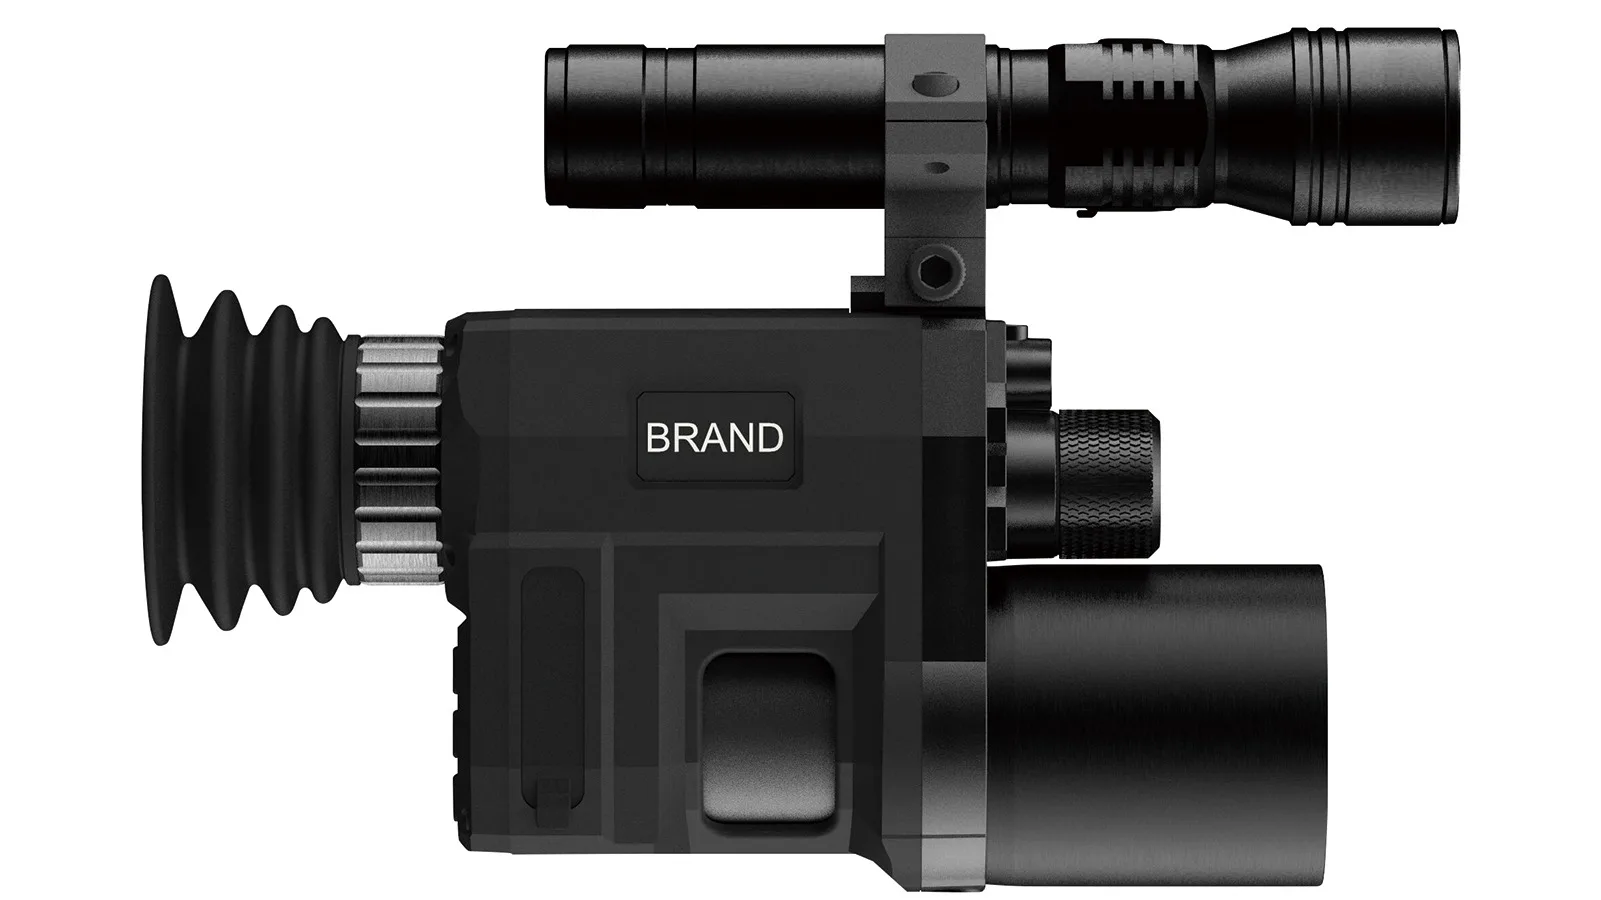 

New Infrared Digital Night Vision Hunting Rifle Scope Air Riflescope Optic Wifi Camera Monocular Reticle Scope